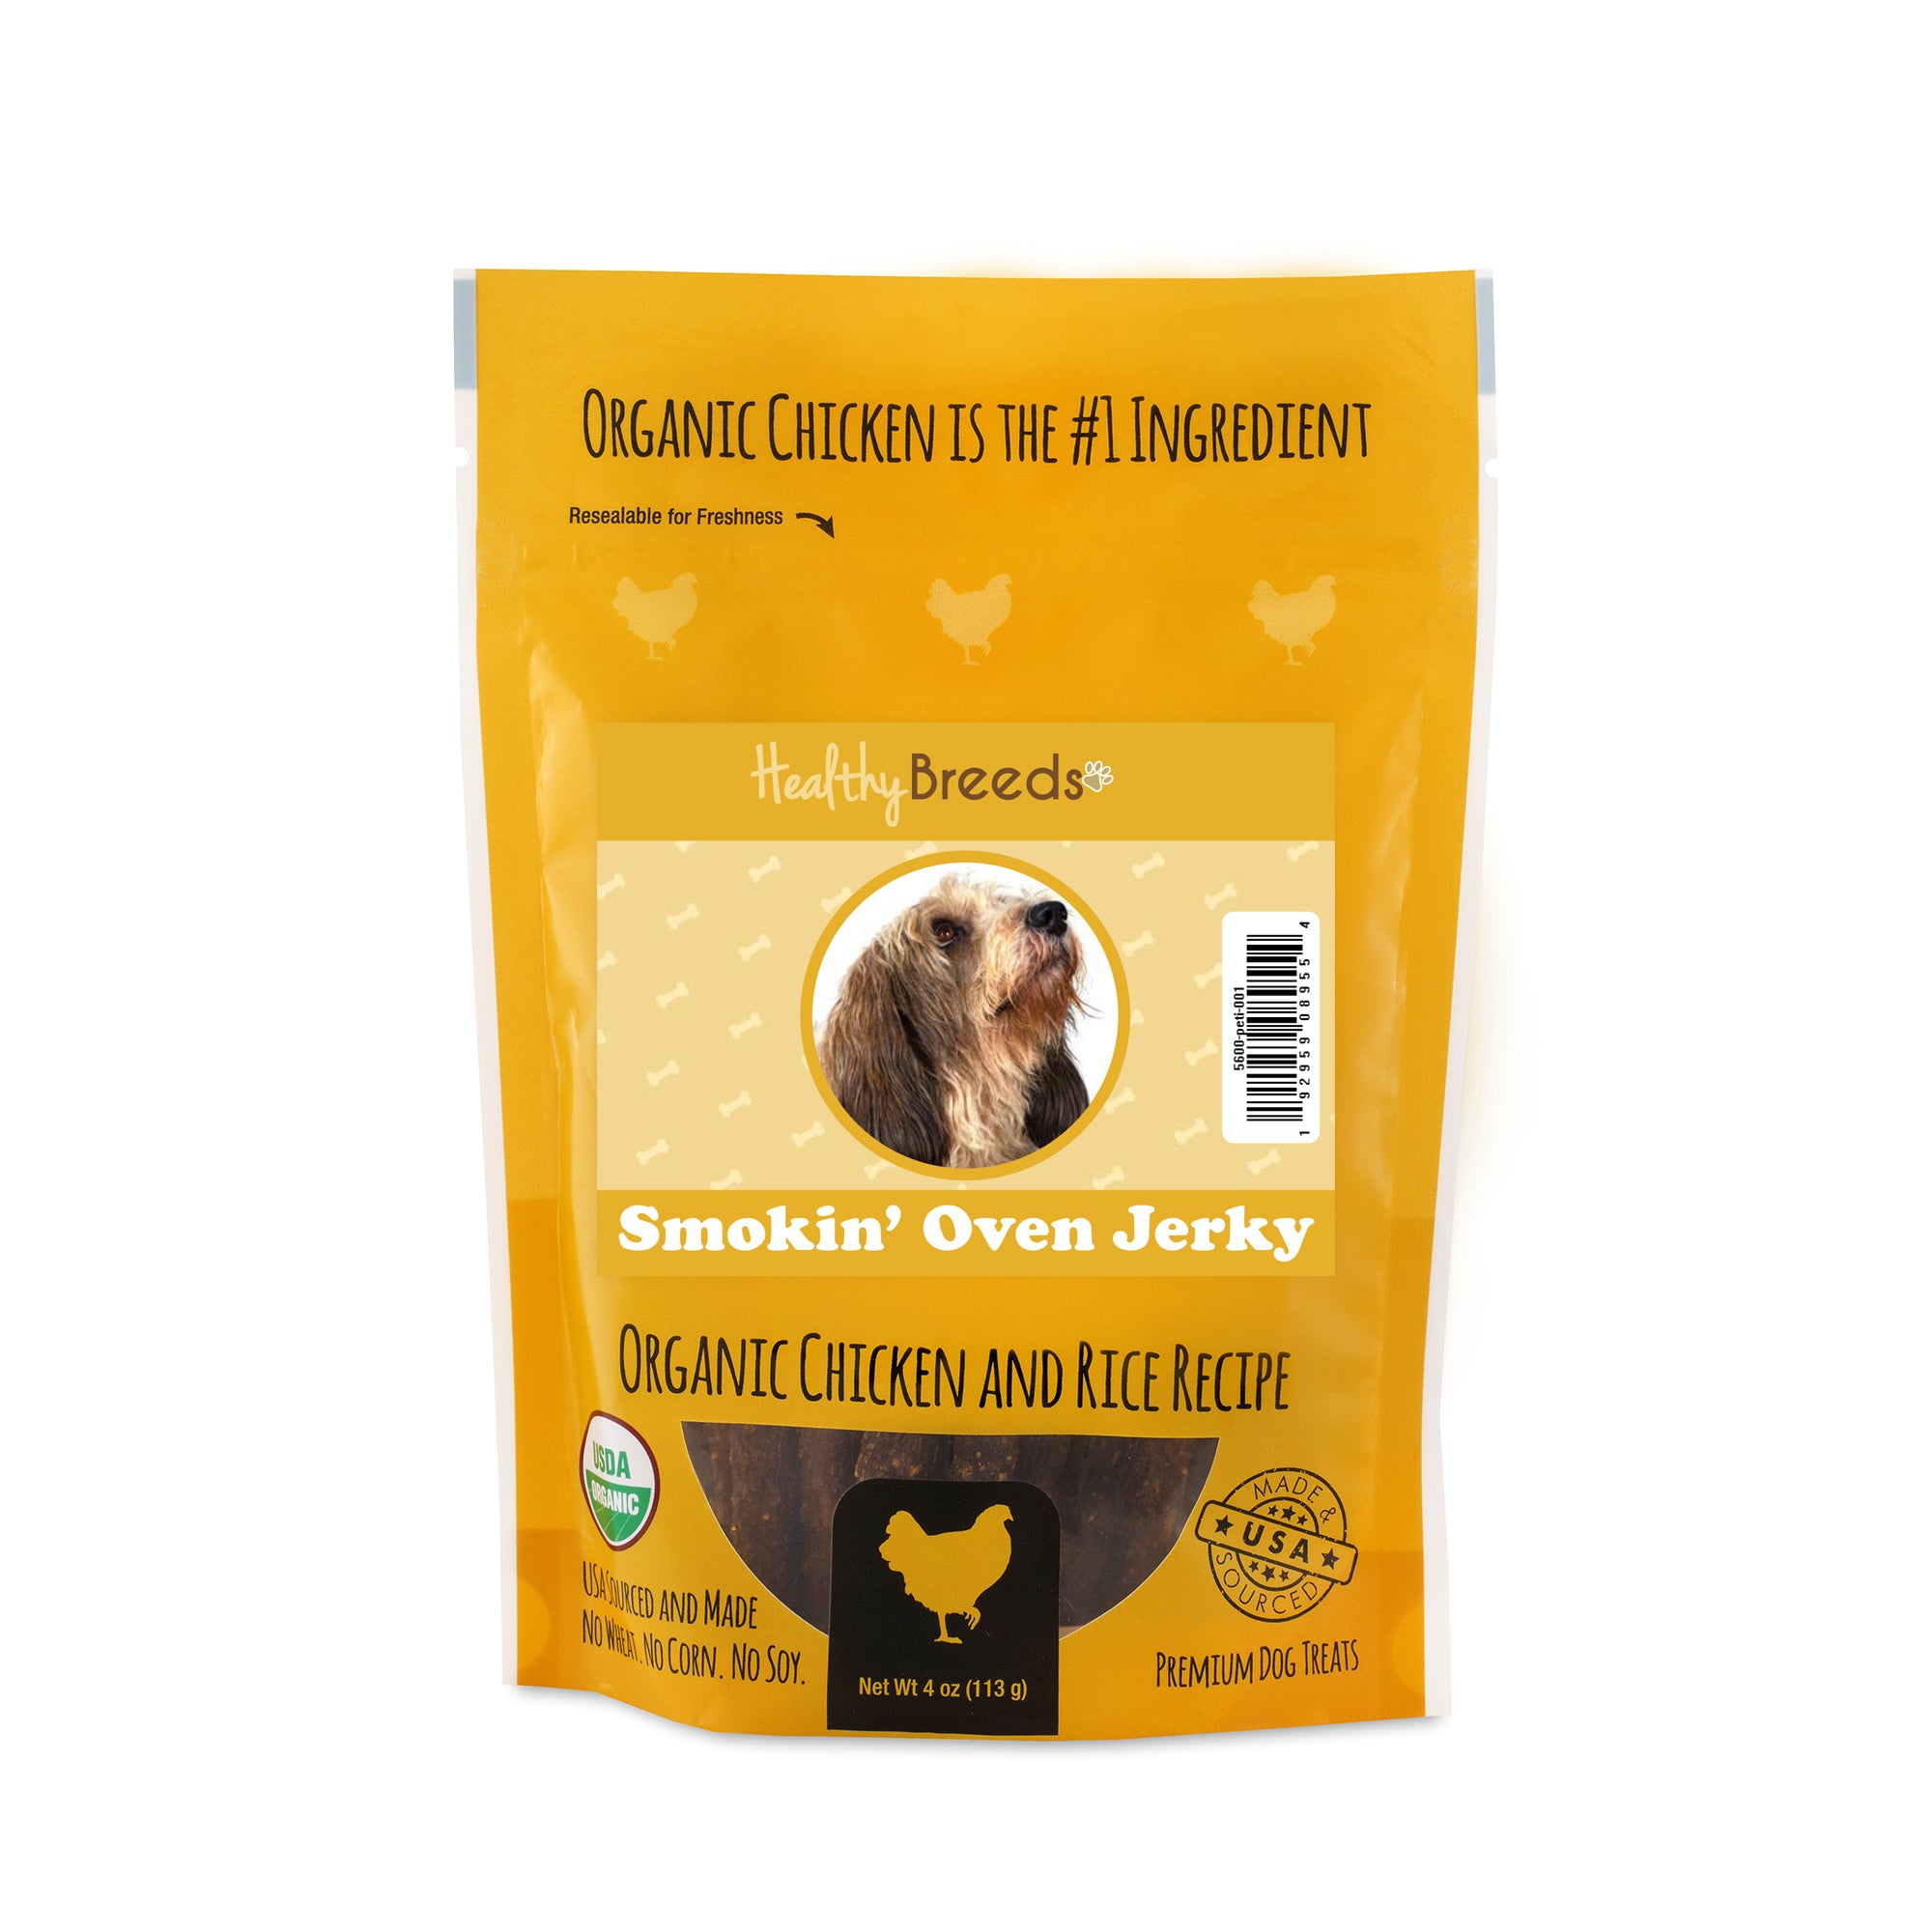 Petits Bassets Griffons Vendeen Smokin' Oven Organic Chicken & Rice Recipe Jerky Dog T